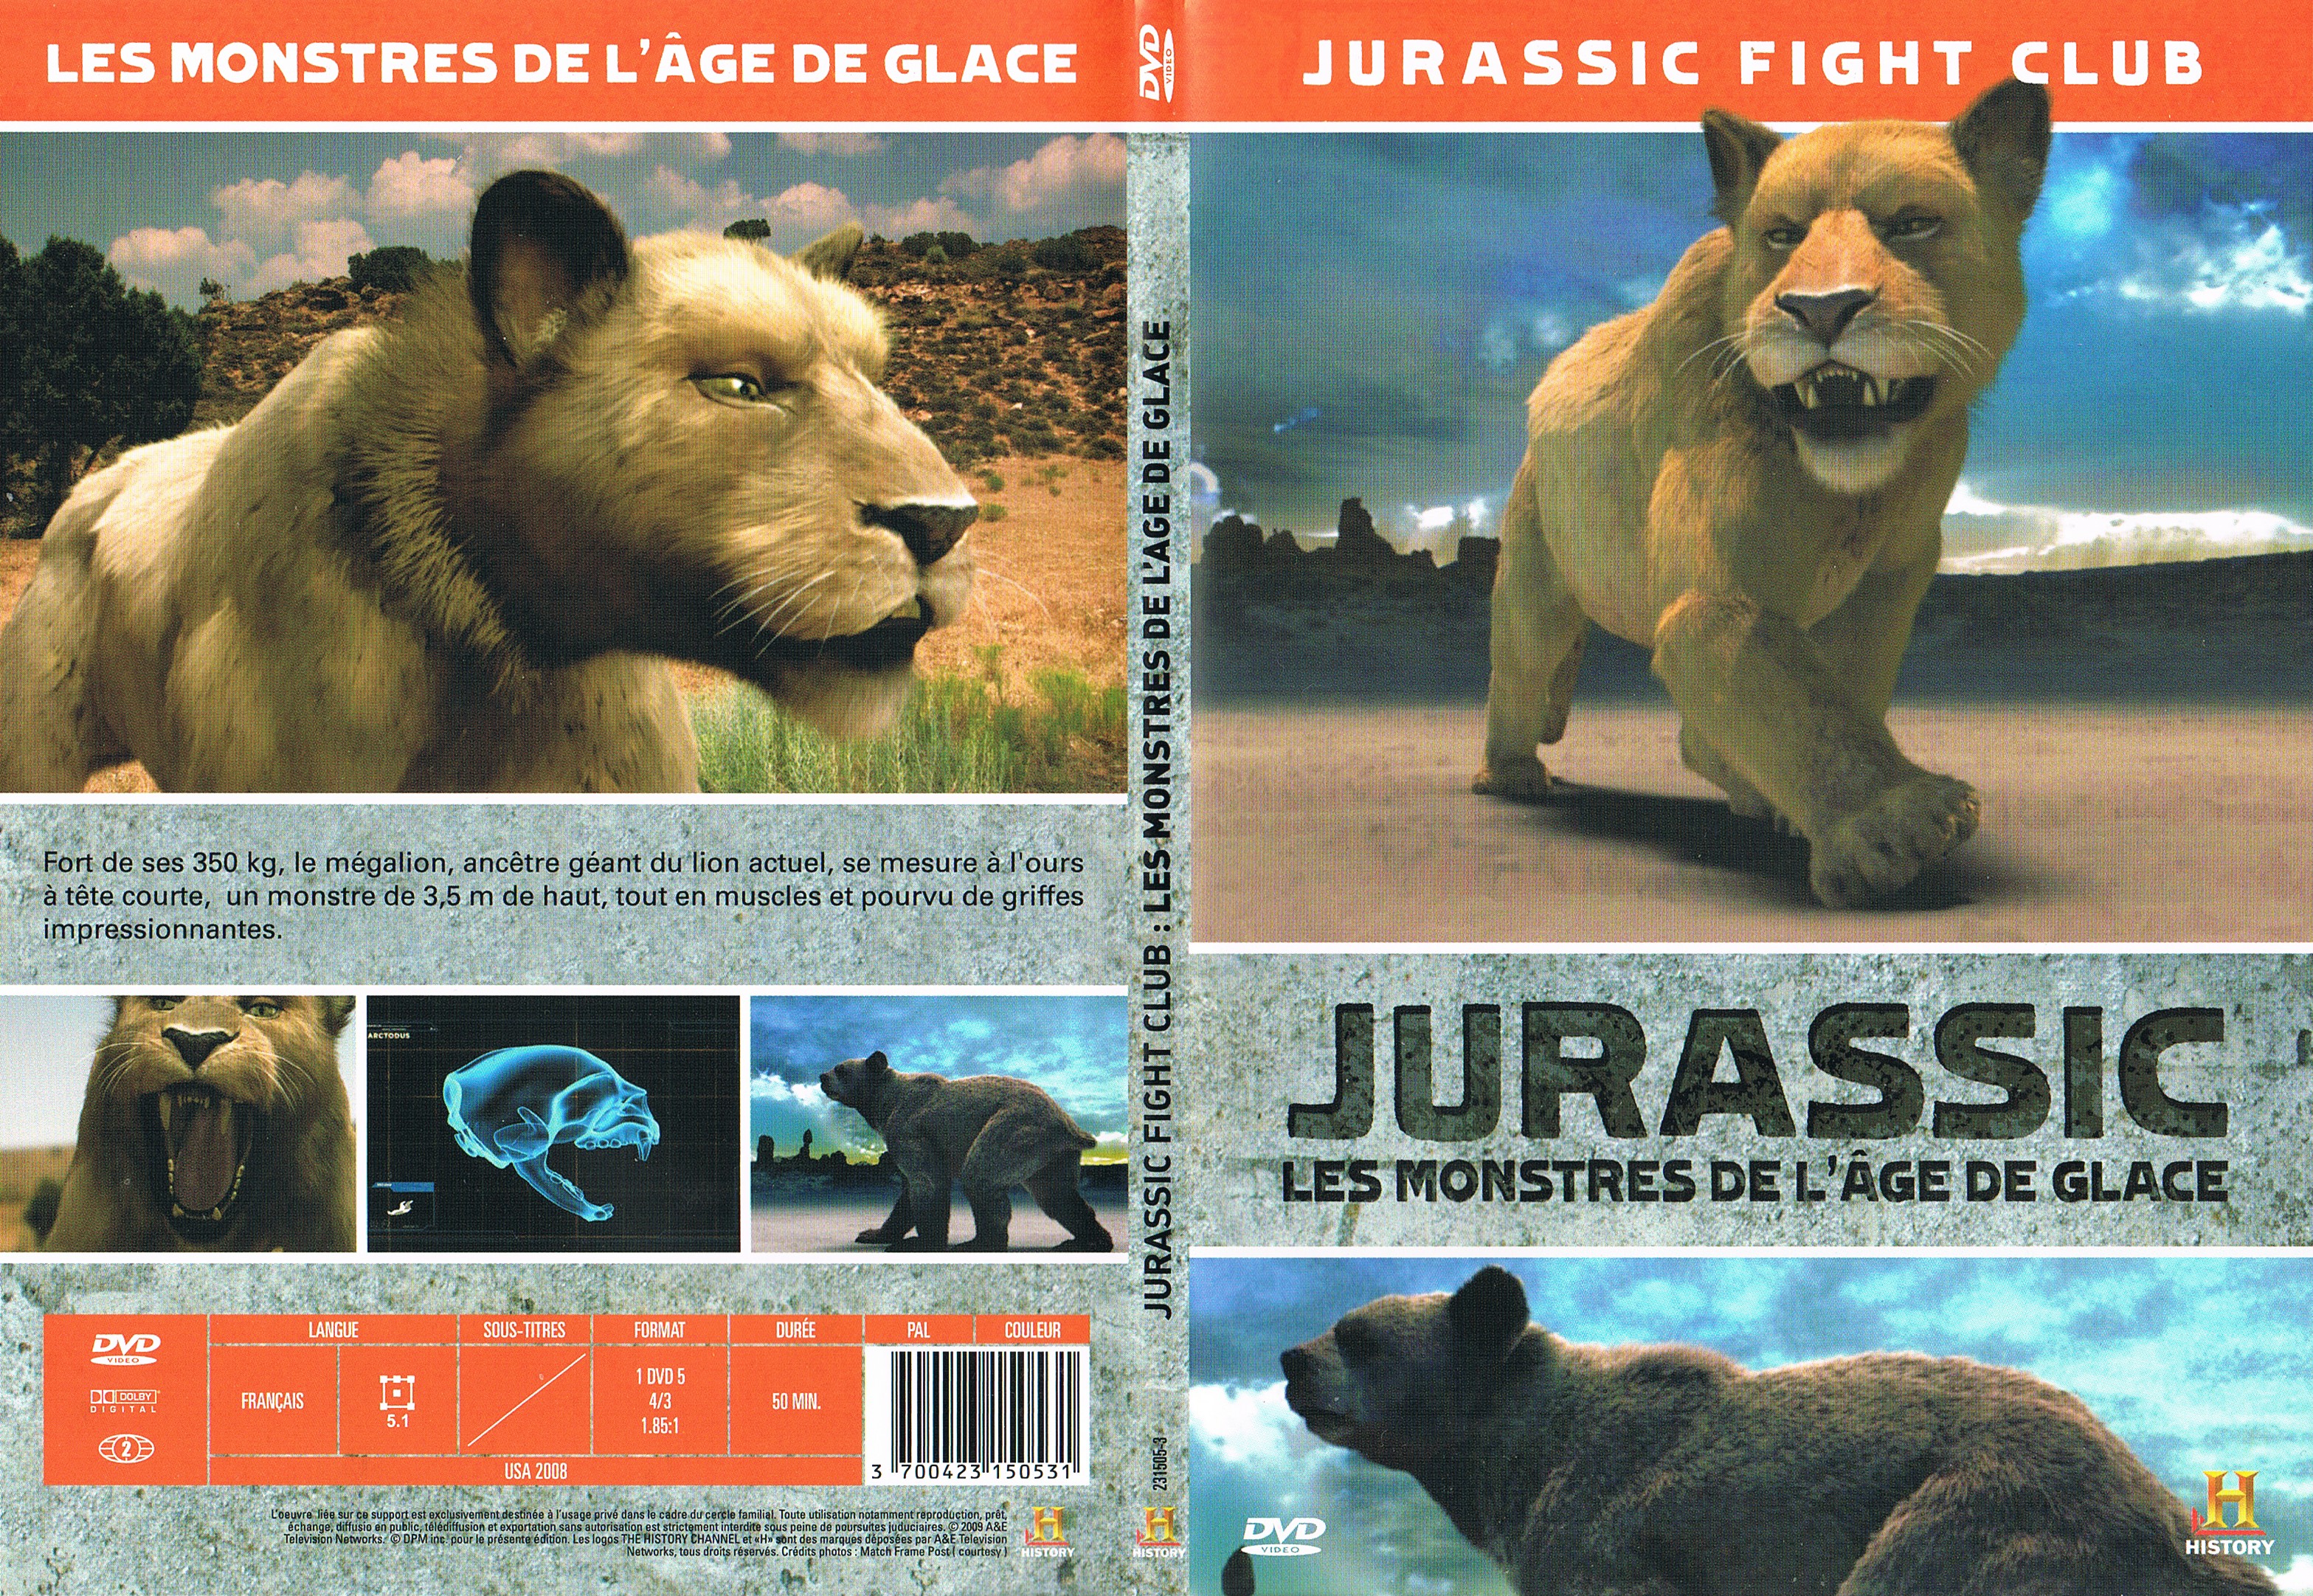 Jaquette DVD Jurassic Fight Club - Les Monstres De L